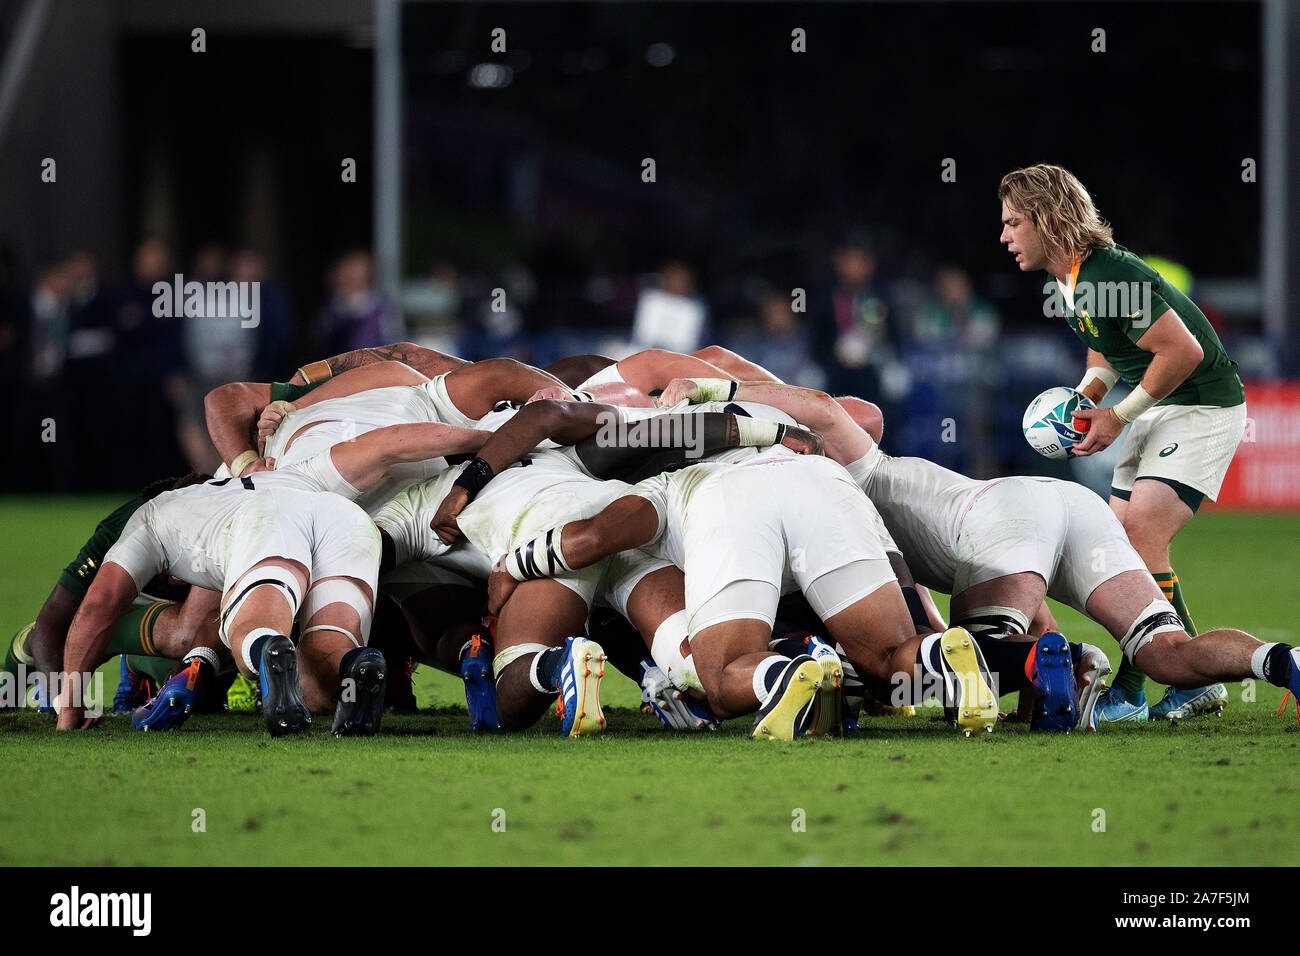 10+ Campeonato Mundial De Rugby Union 2019 fotos de stock, imagens